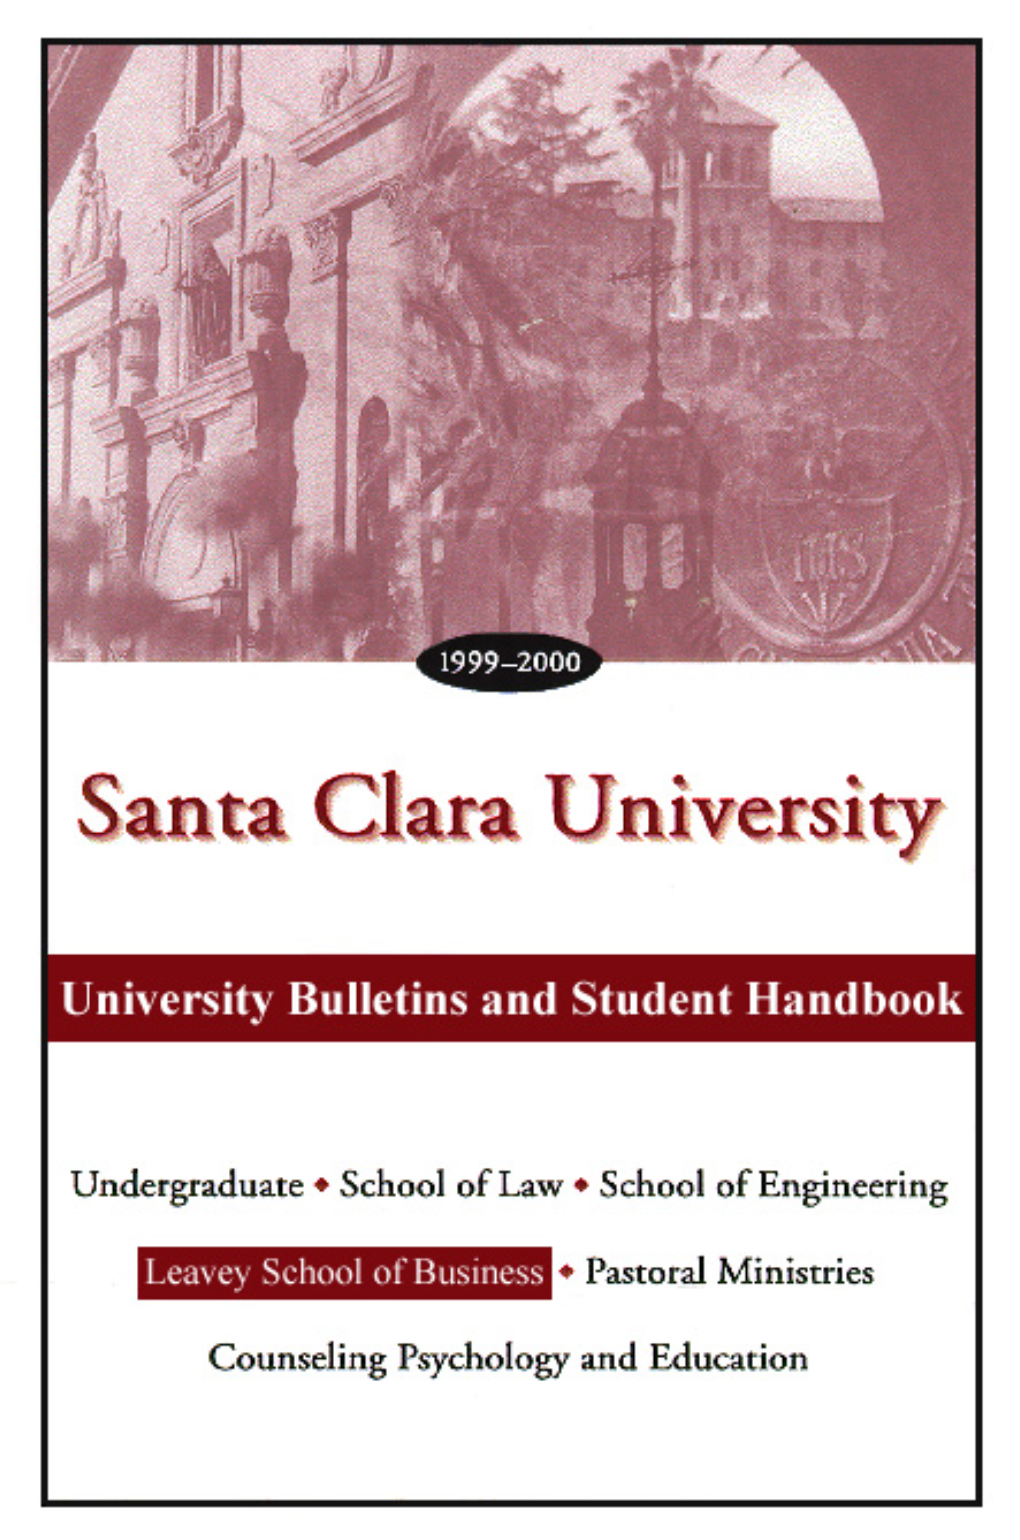 Santa Clara University Leavey School of Business